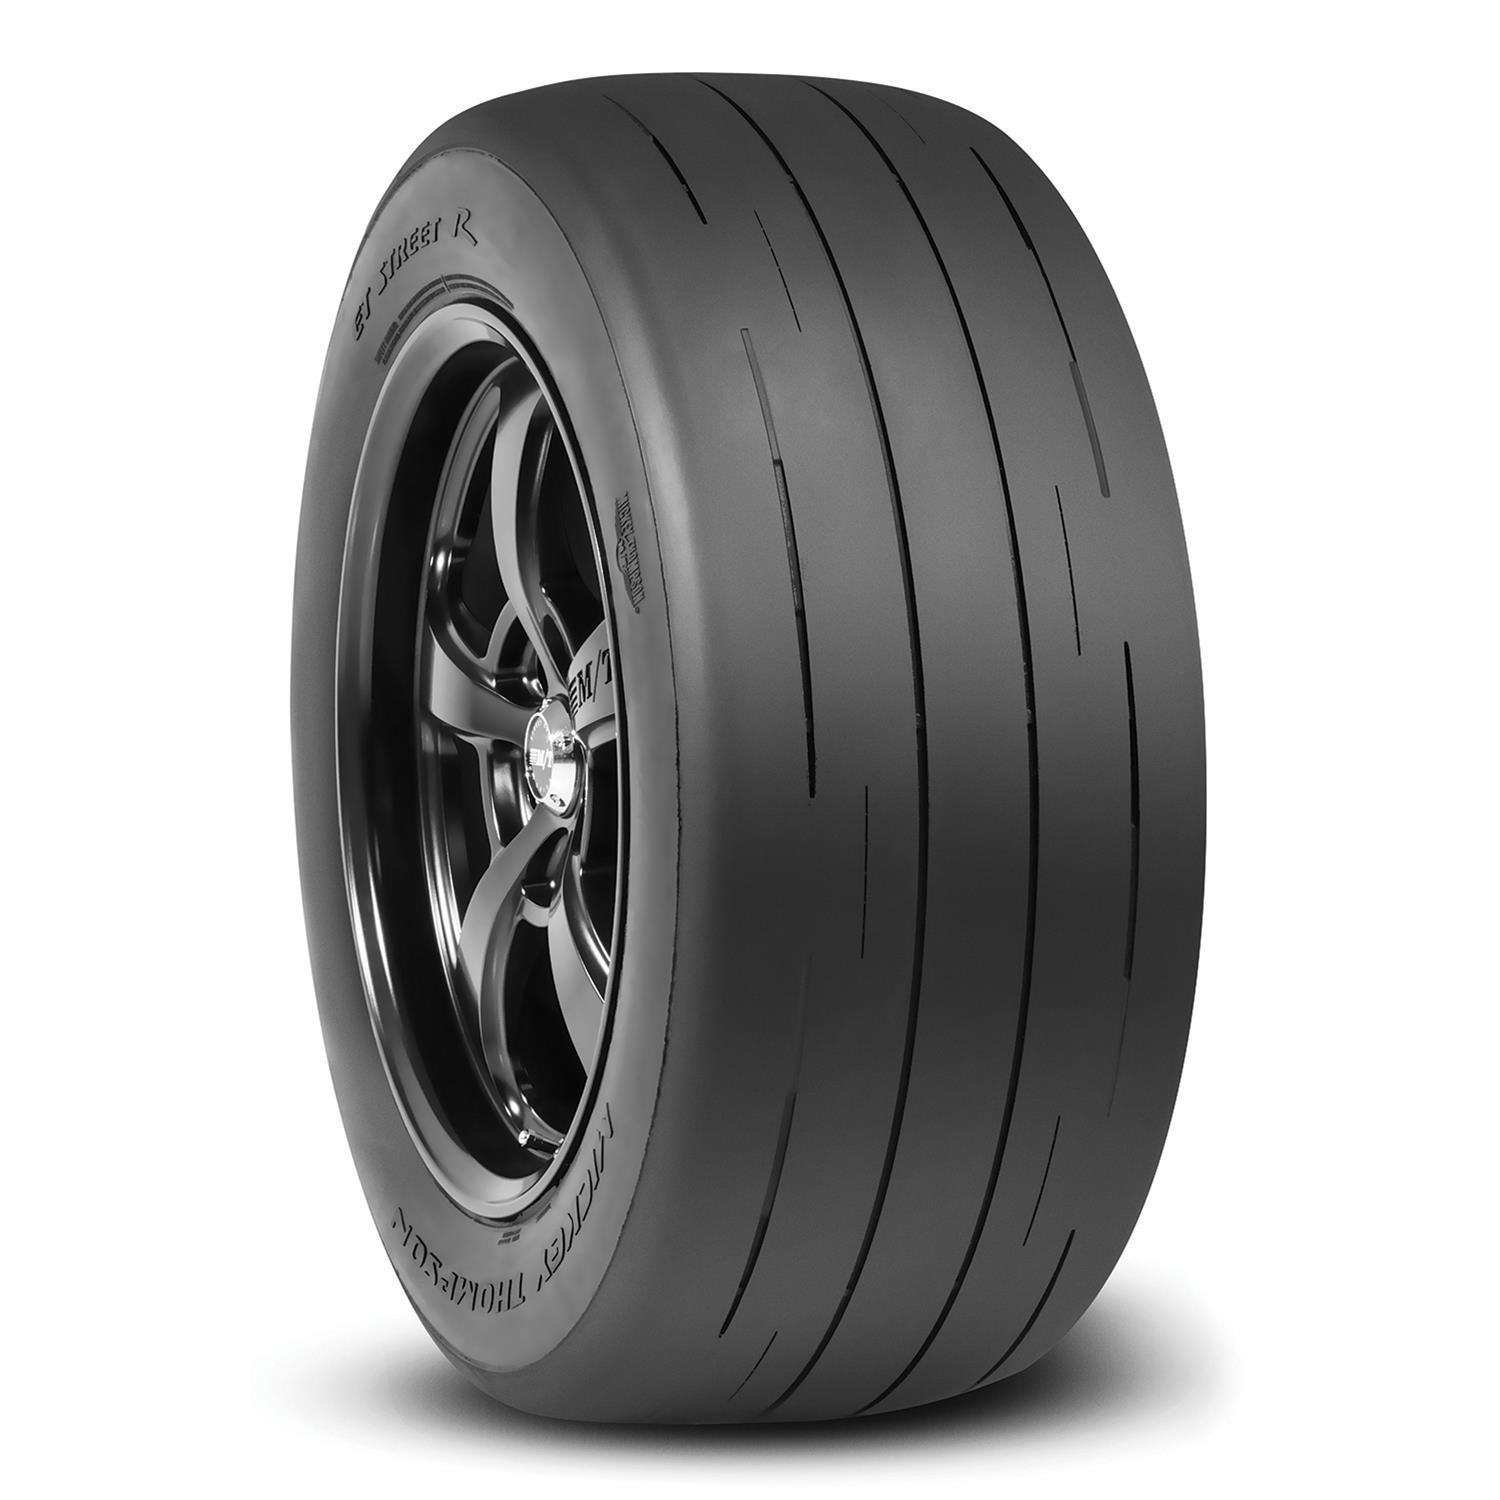 P275/50R15 ET Street R Tire - Burlile Performance Products